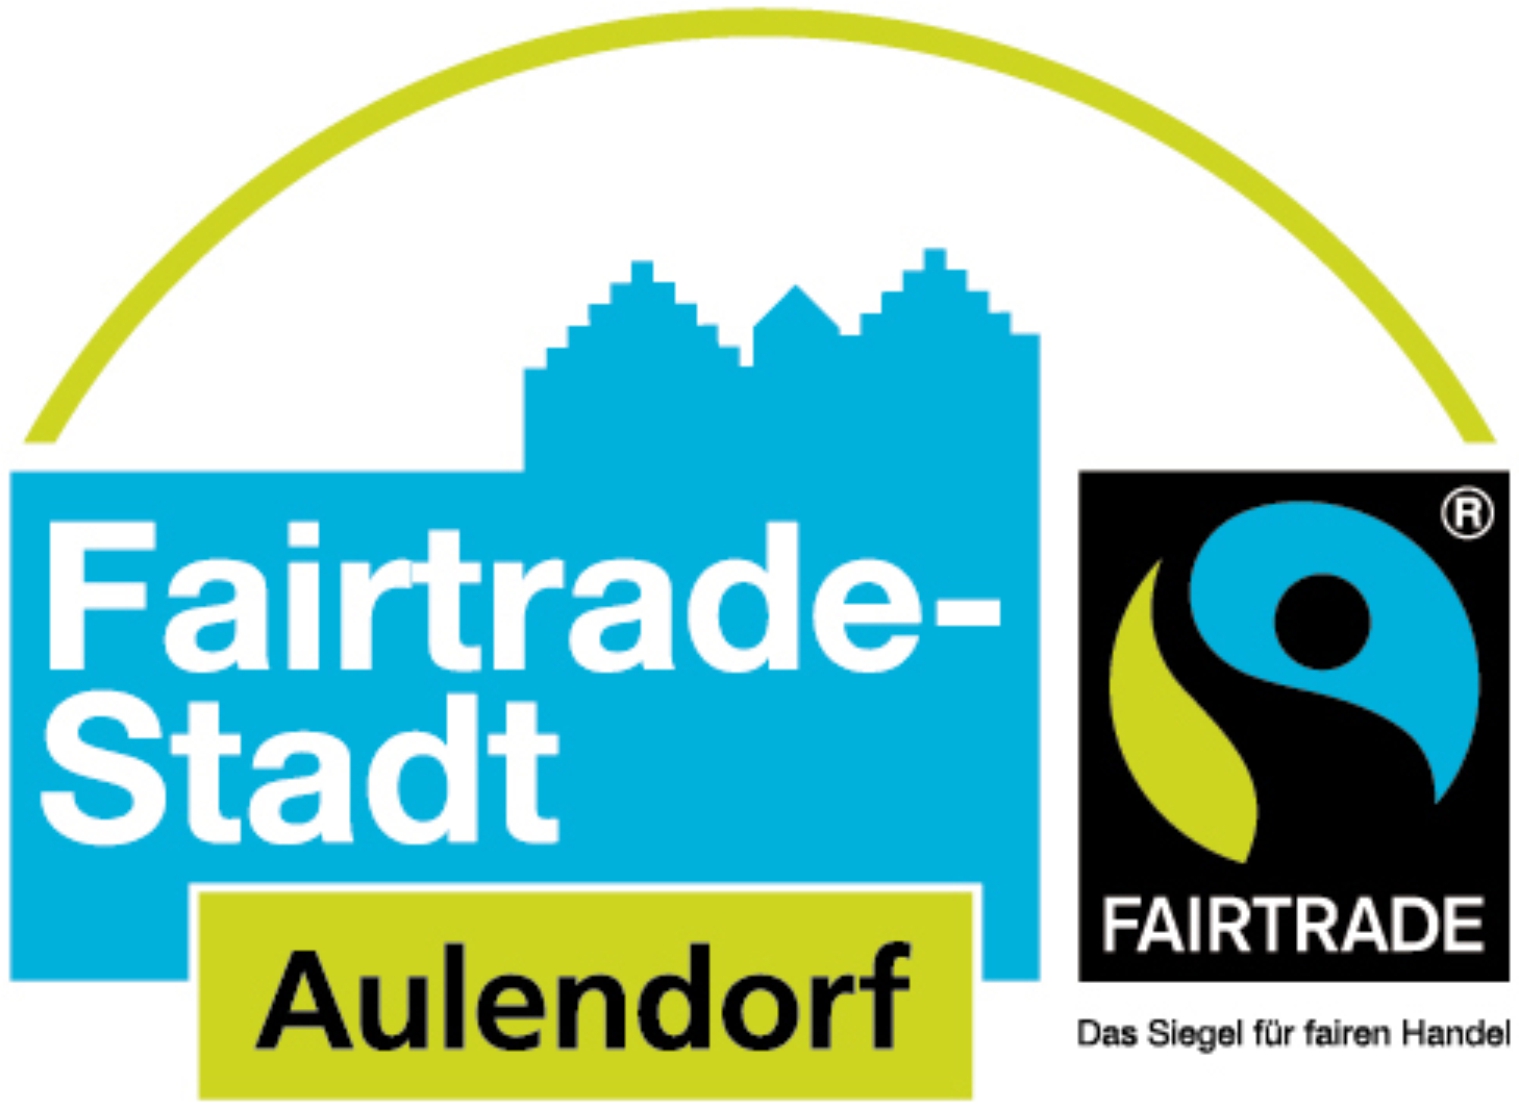 Fairtradestadt Aulendorf